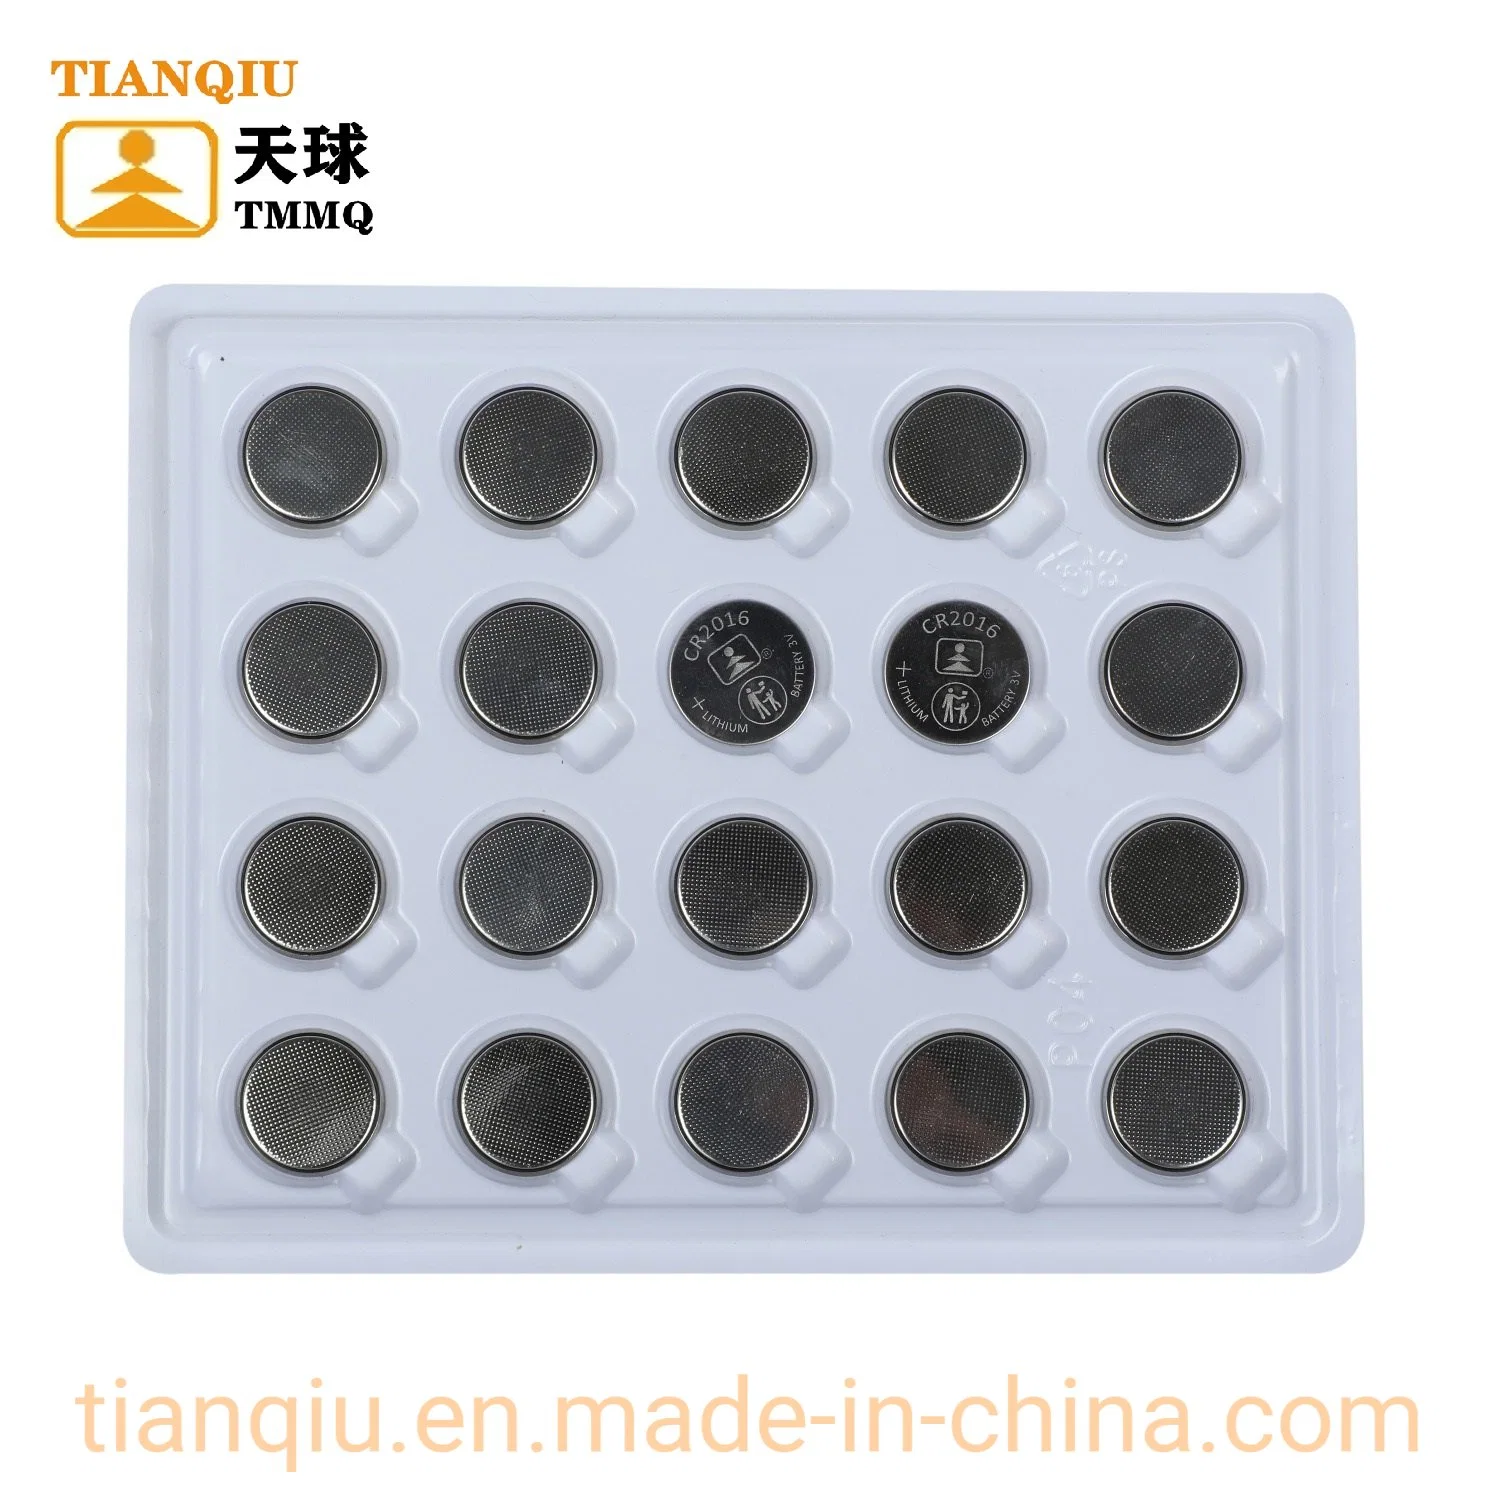 Tianqiu Cr2016 Button Cell Battery 3V Lithium Dry Battery Factory Reloj Pilas